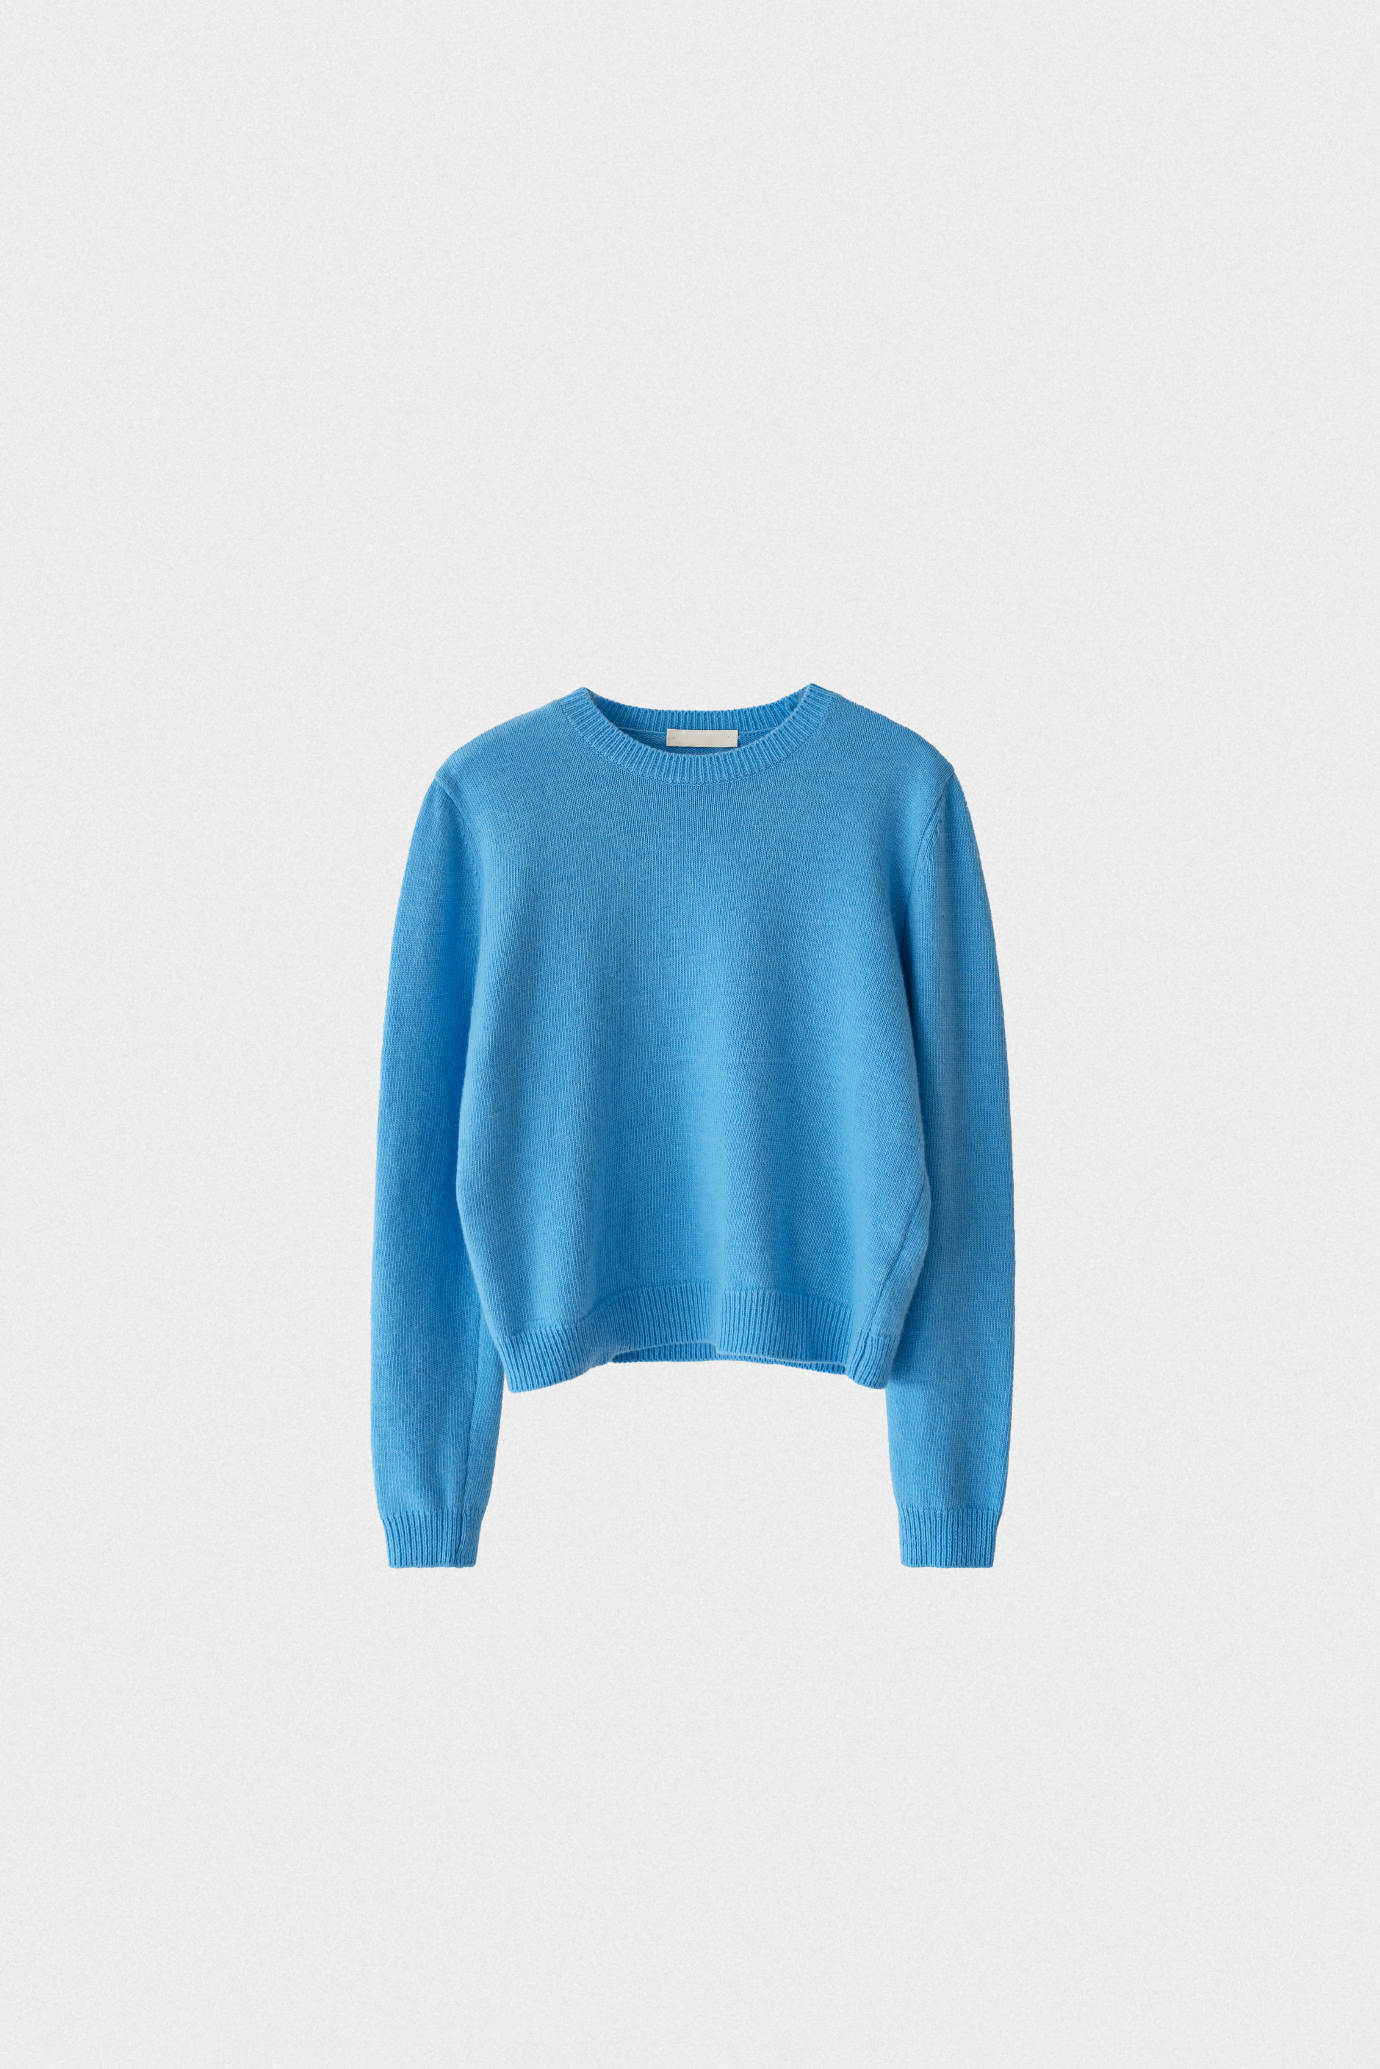 19669_Grape Wool Crewneck Sweater [ow]